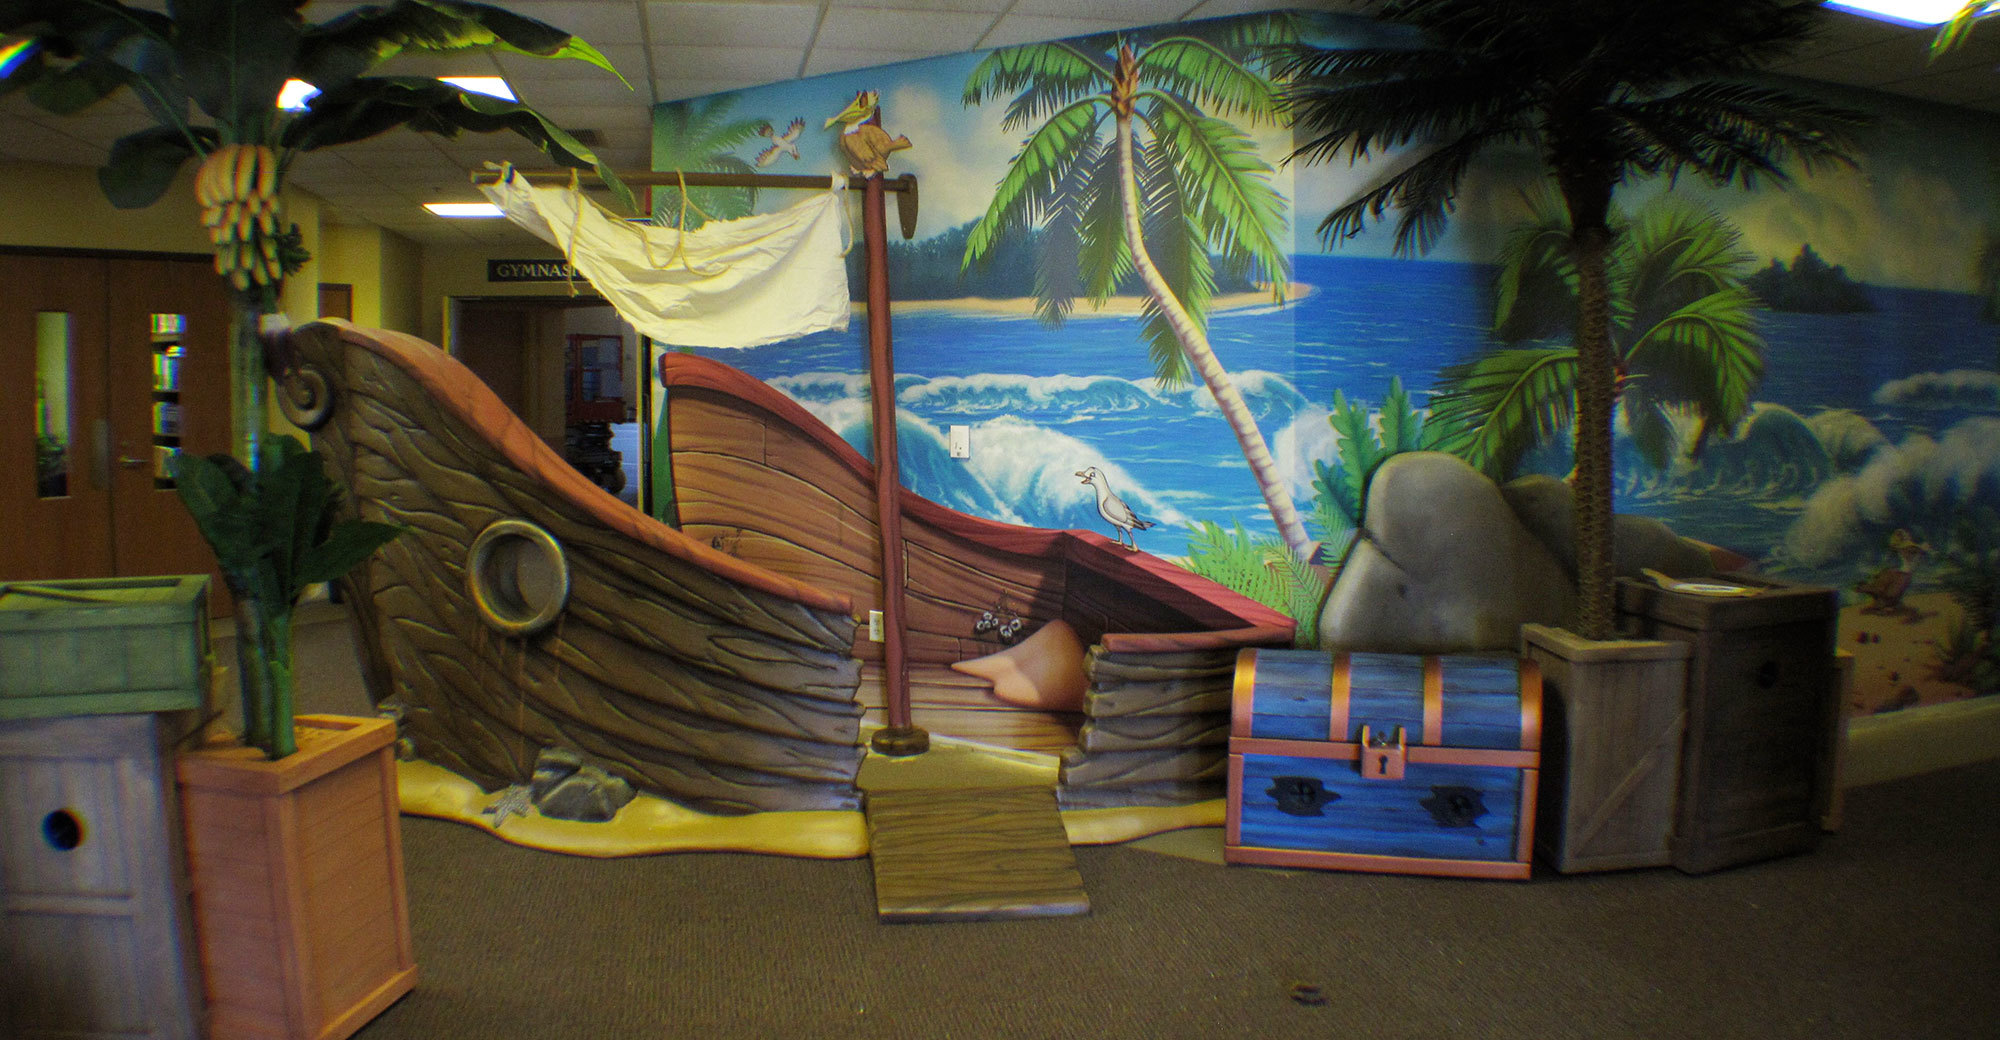 3D sculpted shipwreck, crates, treasure chest and tree plus full murla of jungle beach scene in a Jungle Themed Area at FUMC Springfield